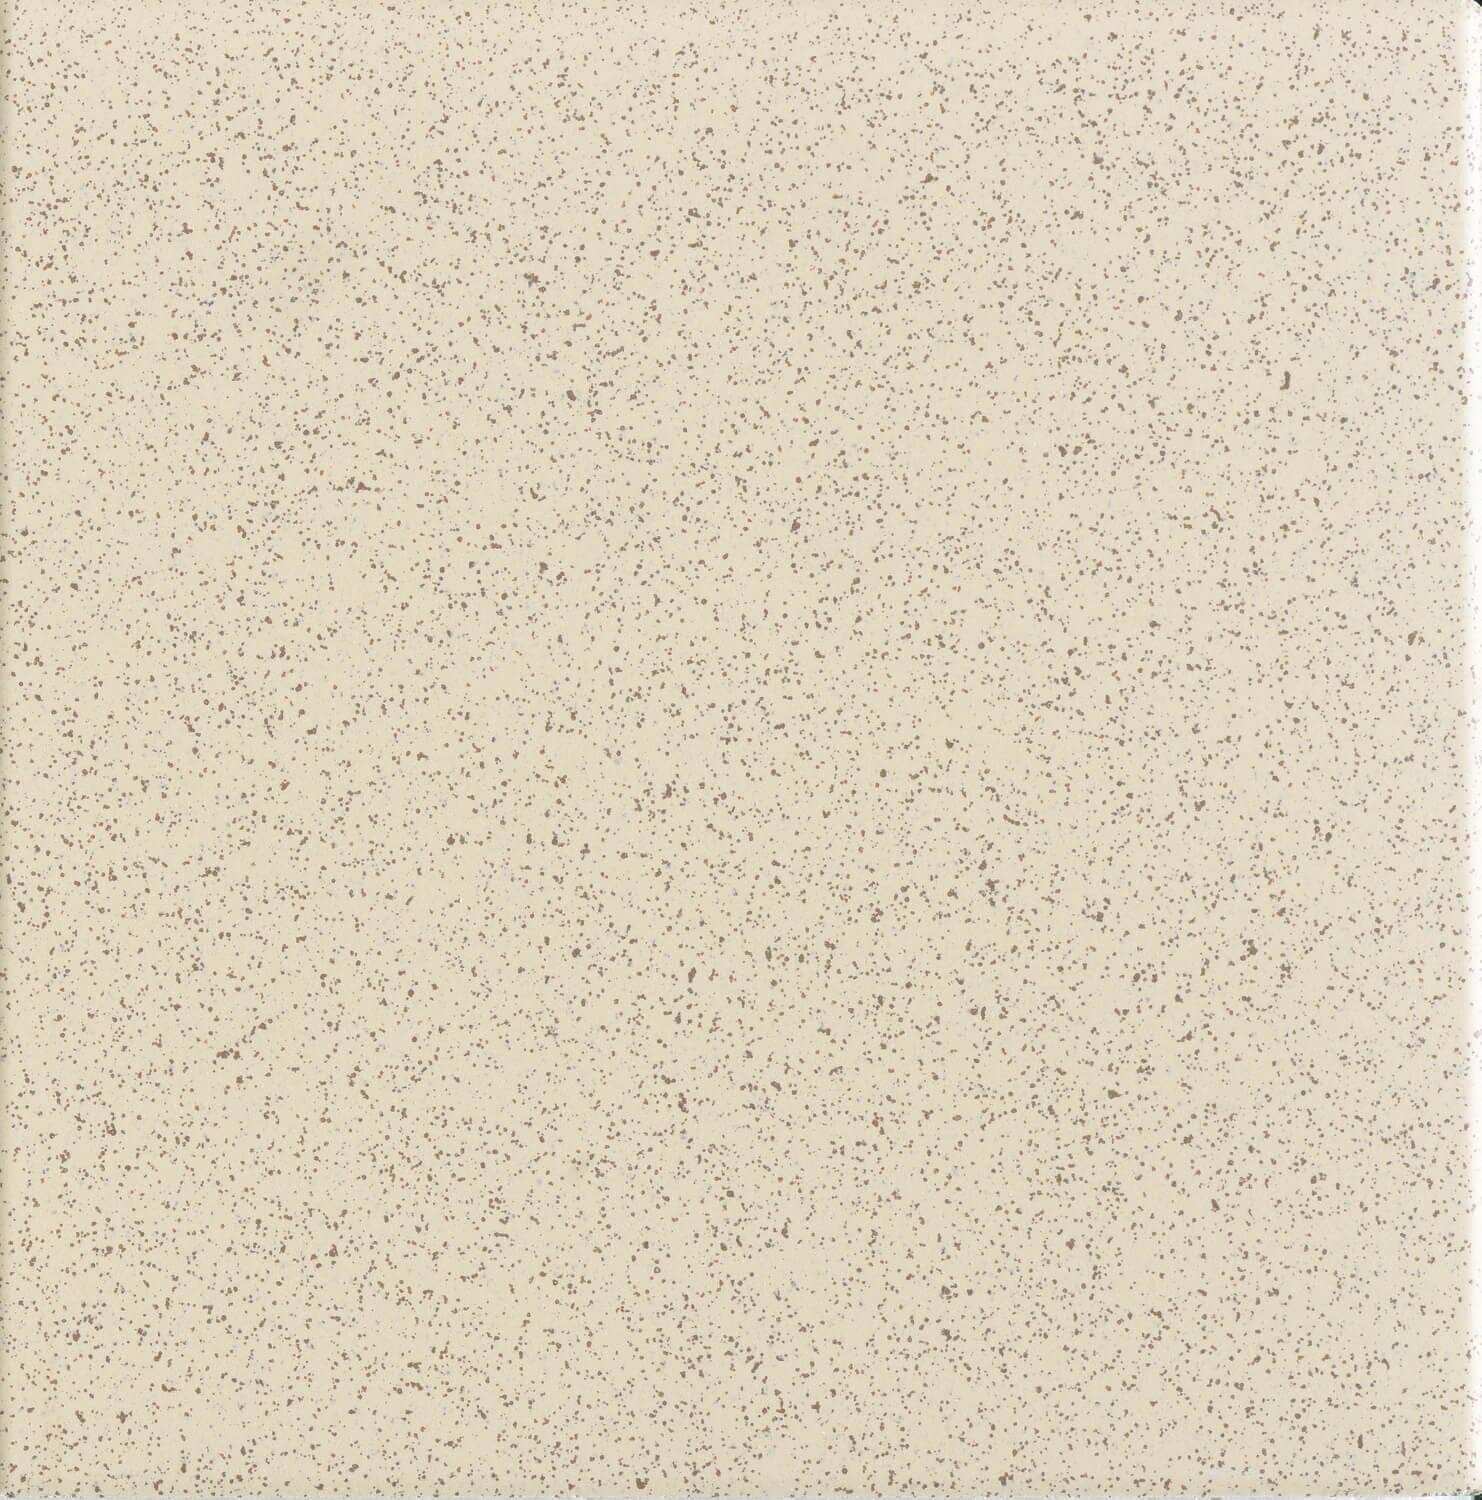 Dorset Woolliscroft Flat Stone Slip Resistant Quarry Tile 148x148mm